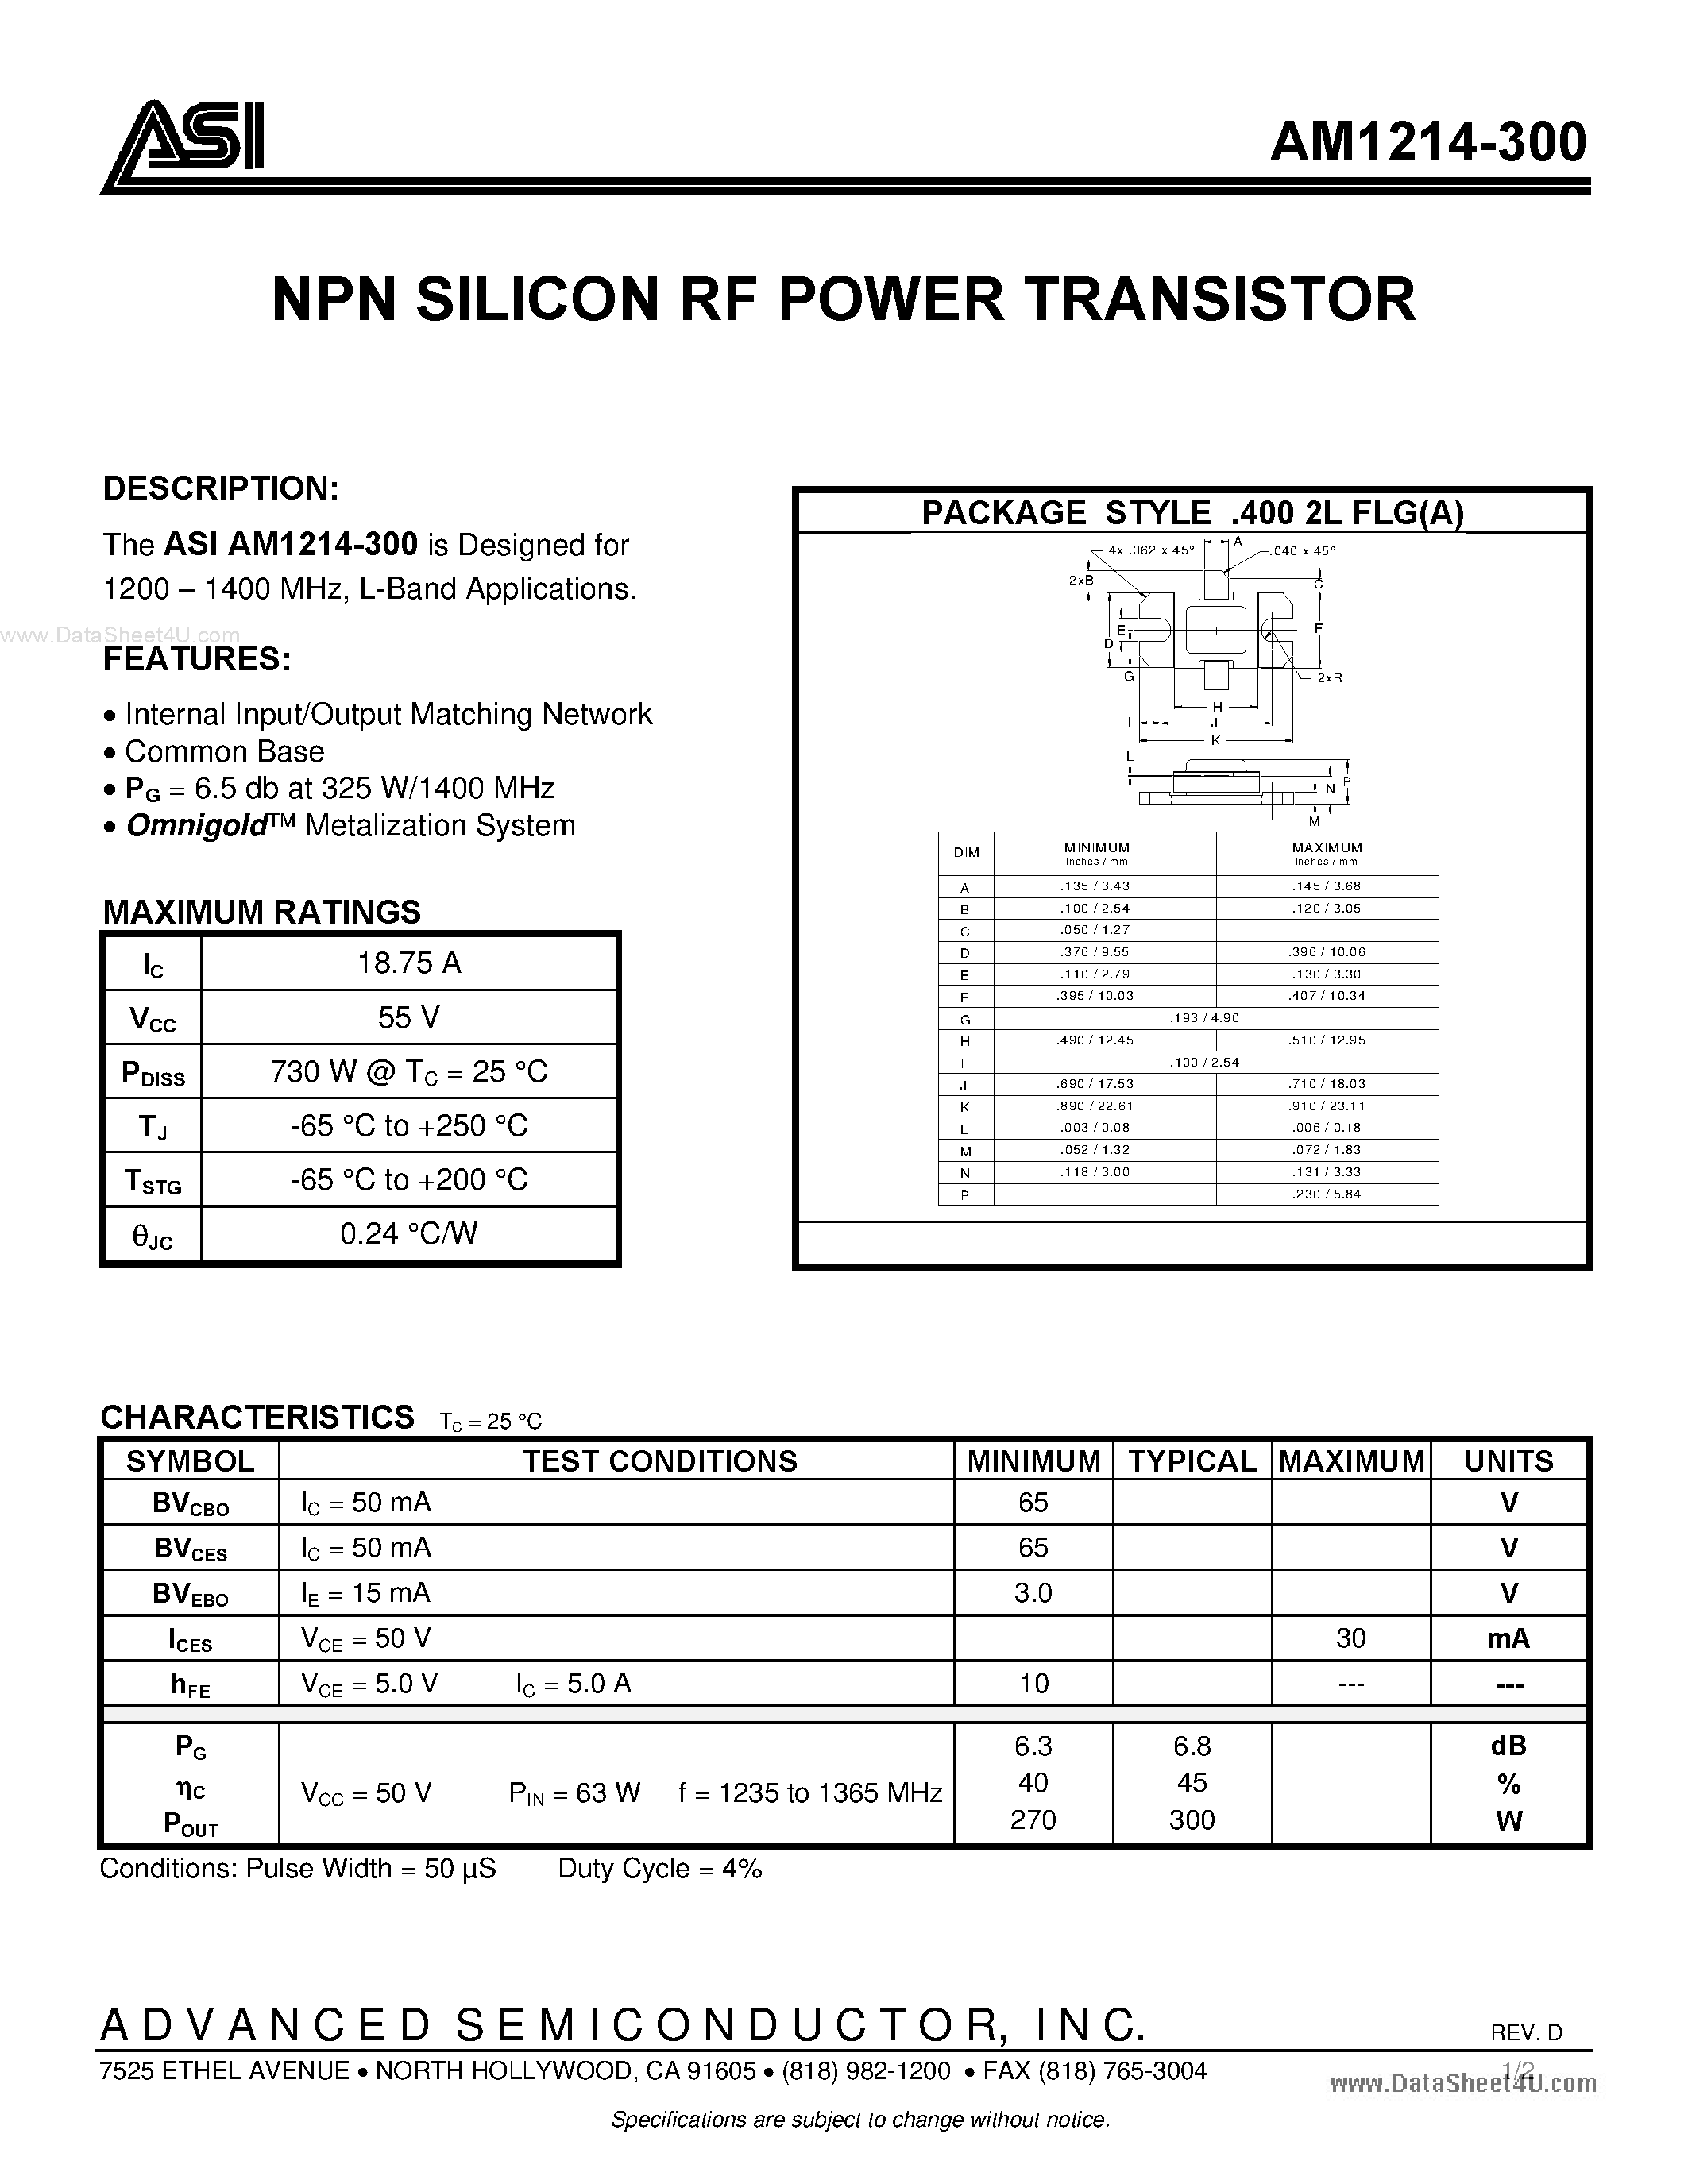 Datasheet AM1214-300 - NPN SILICON RF POWER TRANSISTOR page 1